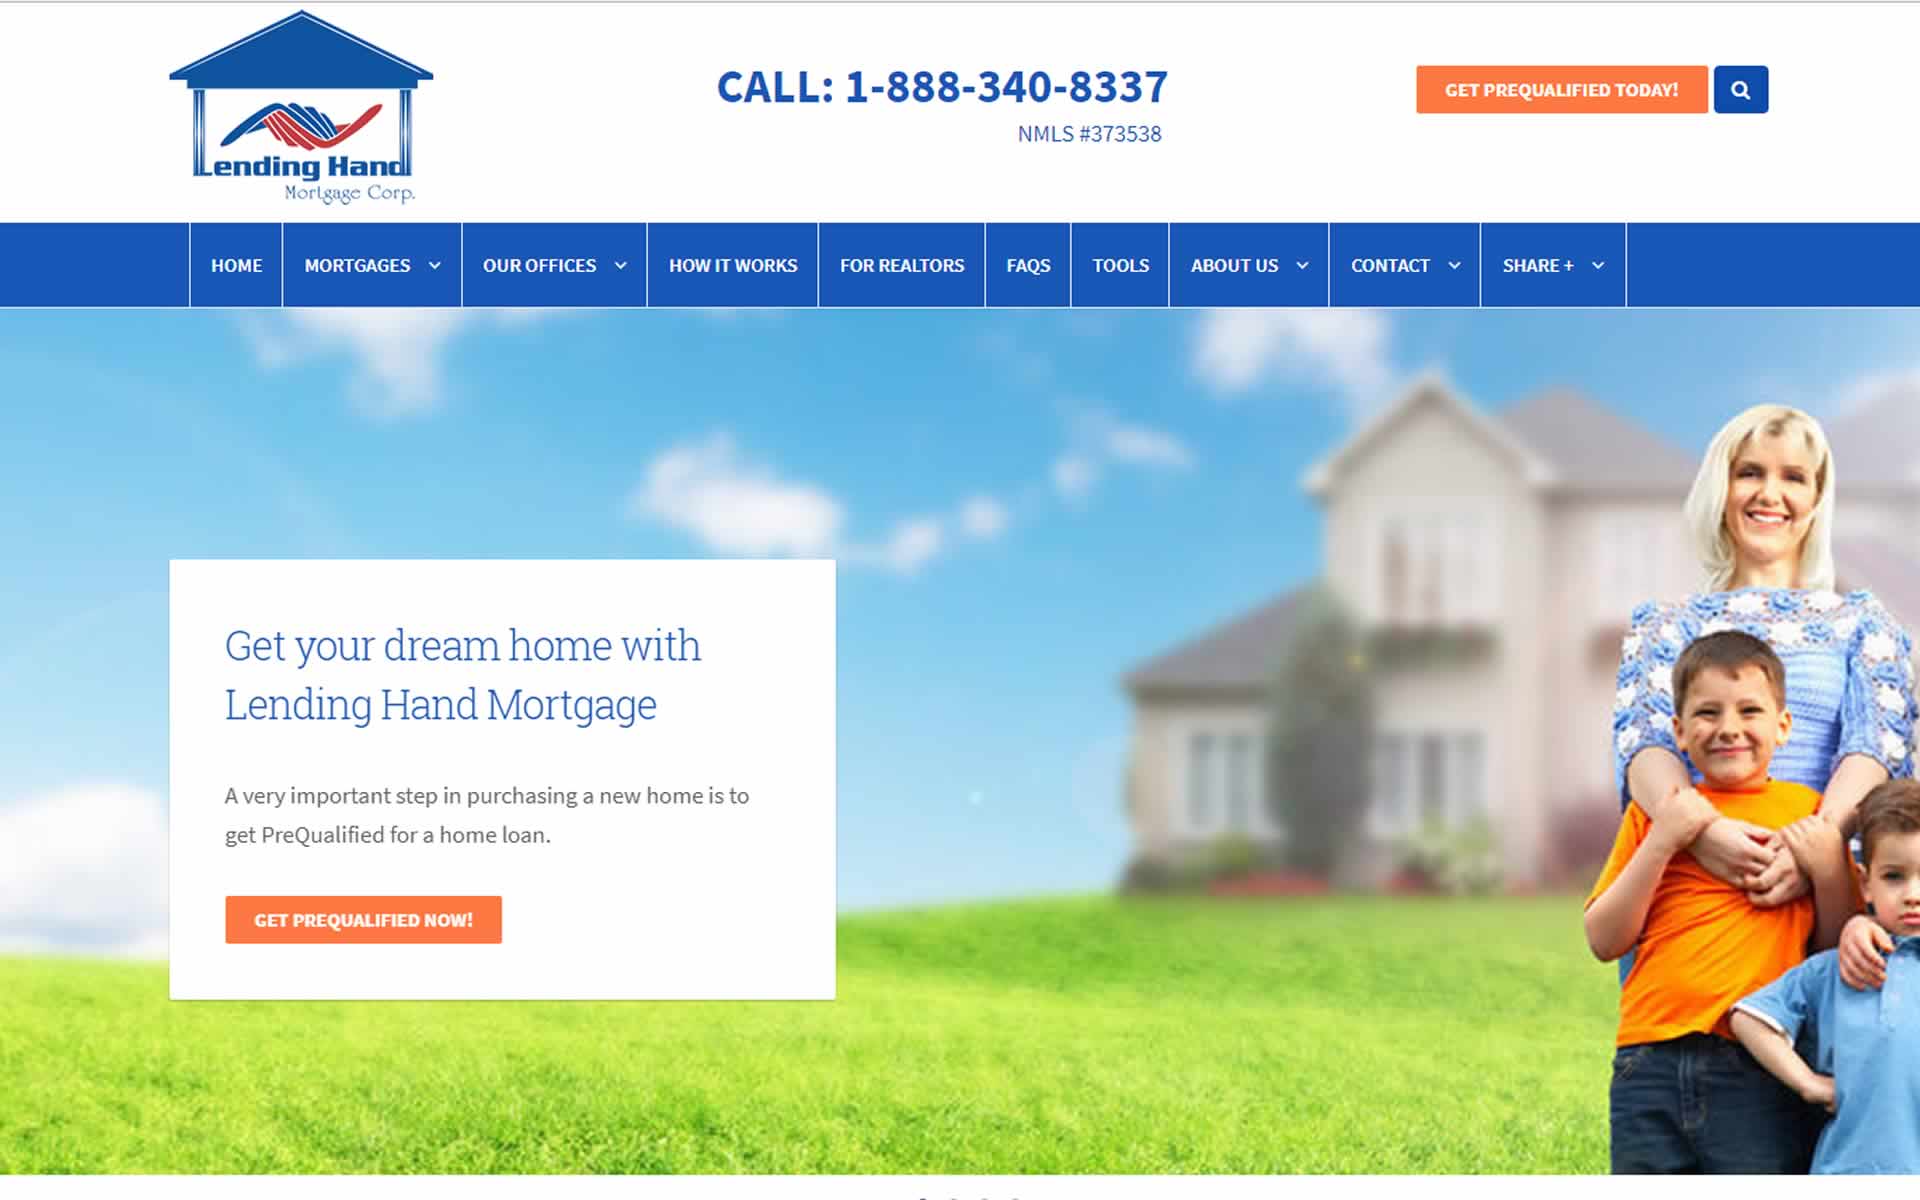 Lending Hand Mortgage